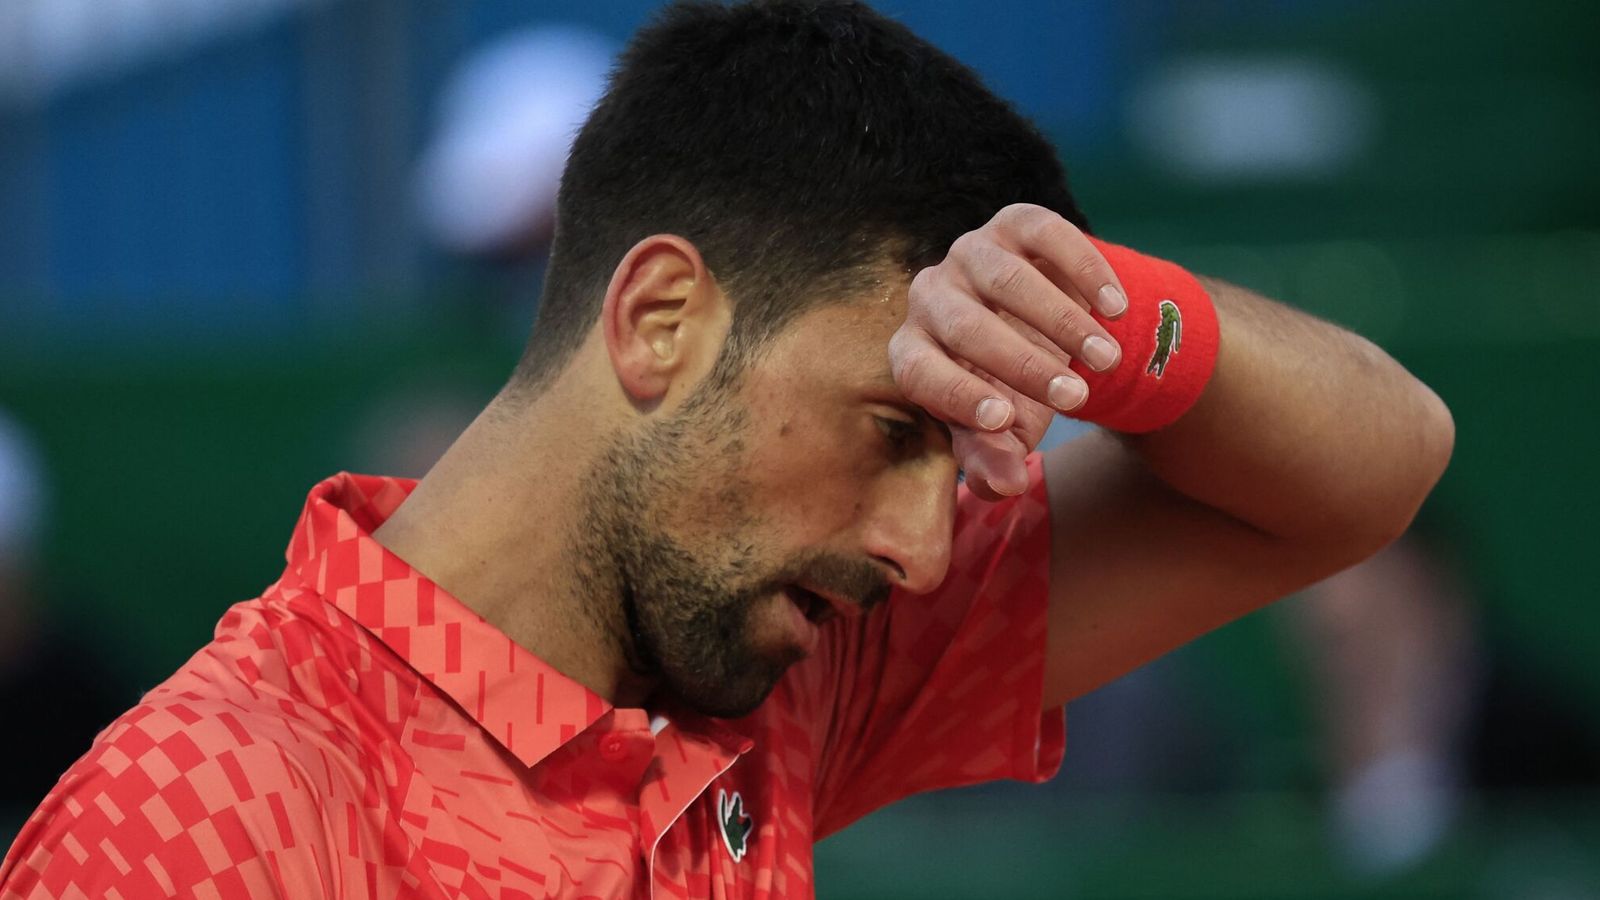 Monte Carlo Masters Novak Djokovic beaten by Lorenzo Musetti in last-16 upset Tennis News Sky Sports